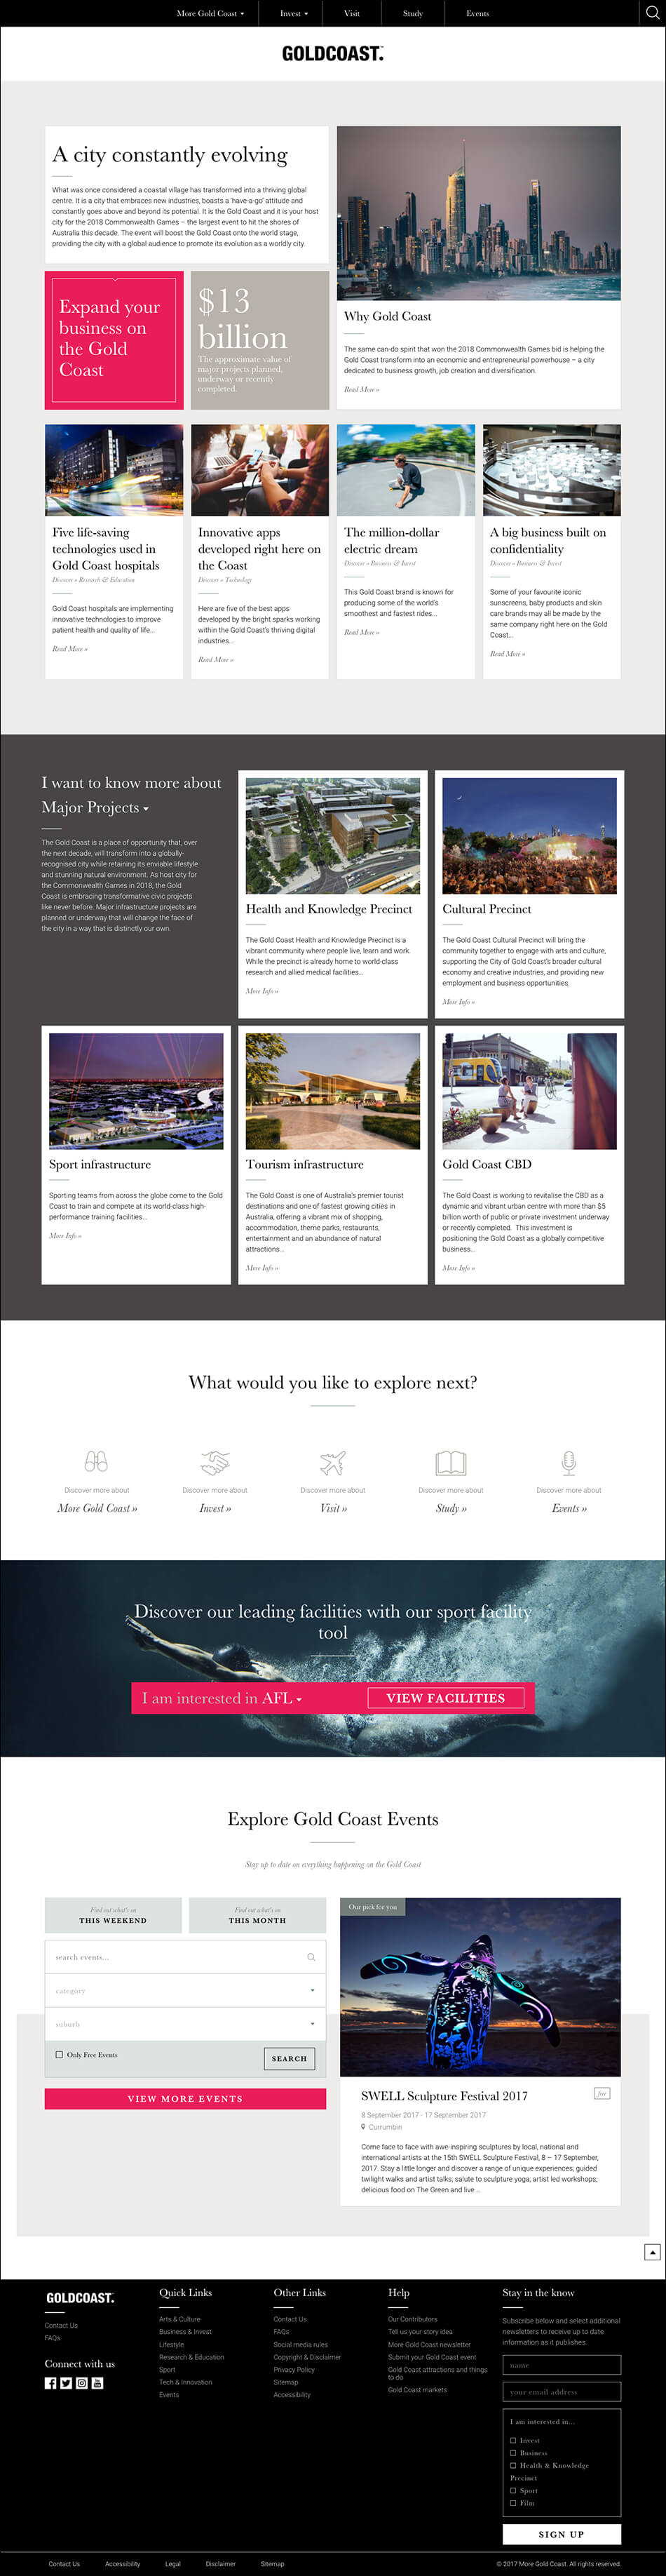 Sesha's Homepage Design